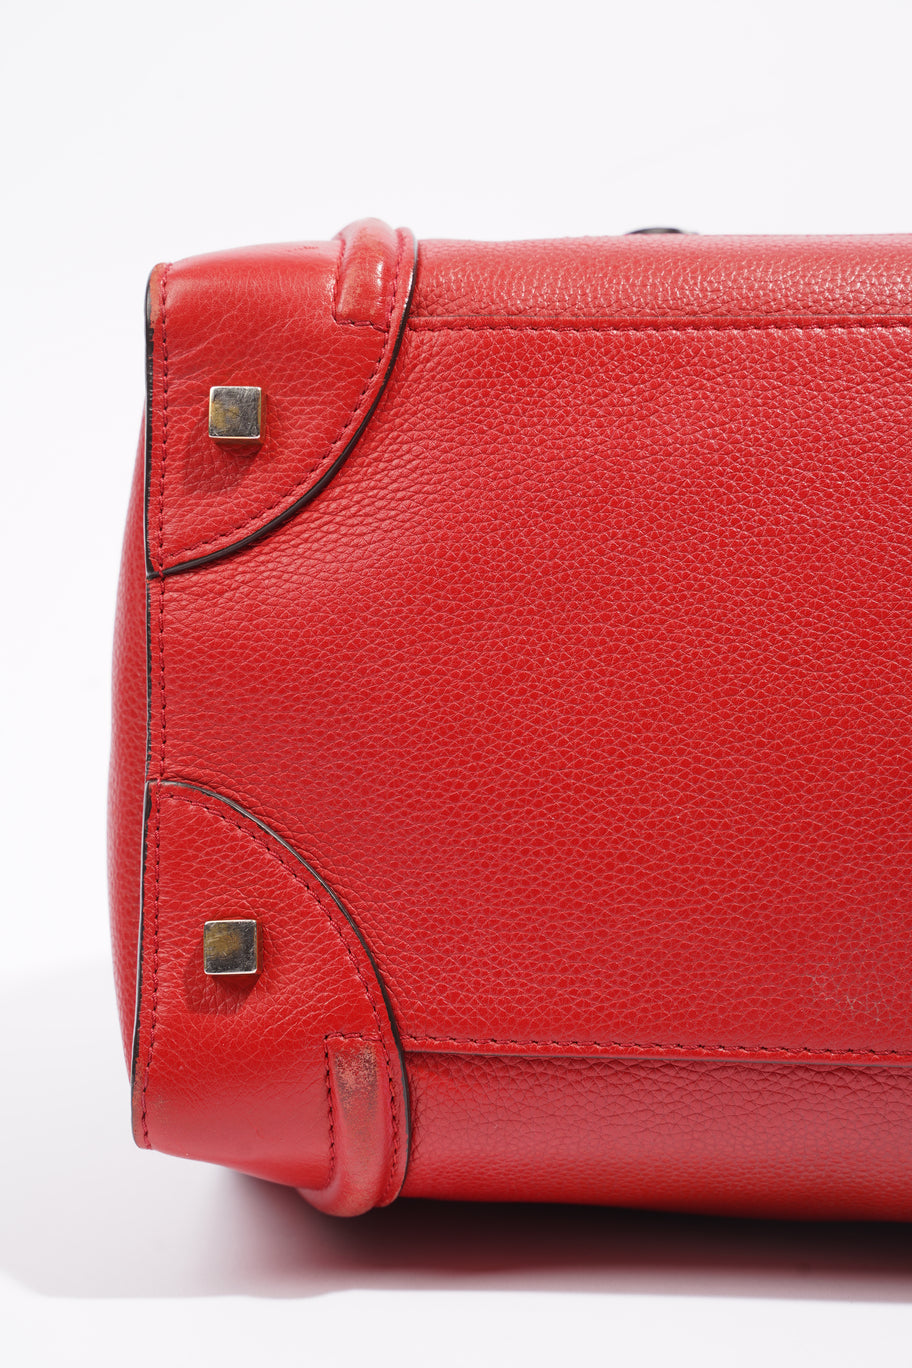 Mini Luggage Tote Red Calfskin Leather Image 12